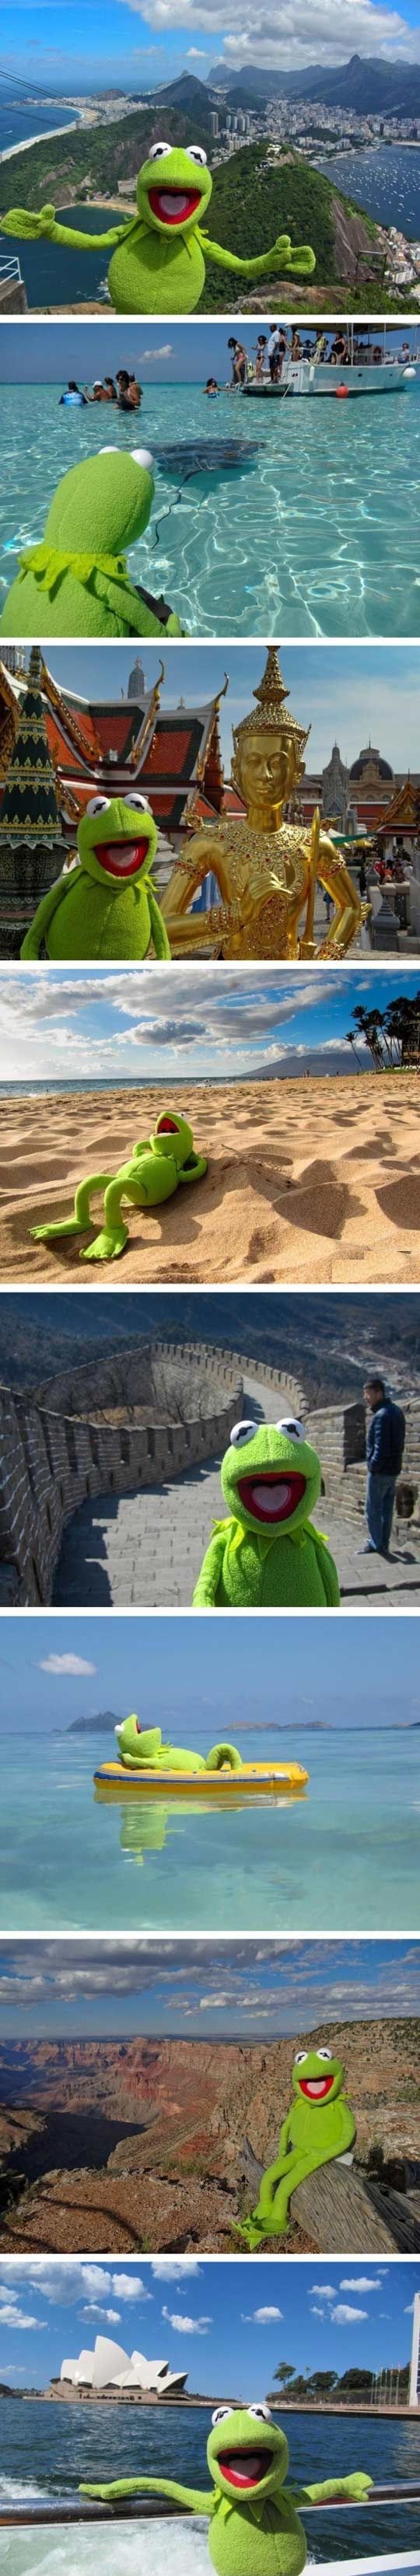 Kermit travels the world.